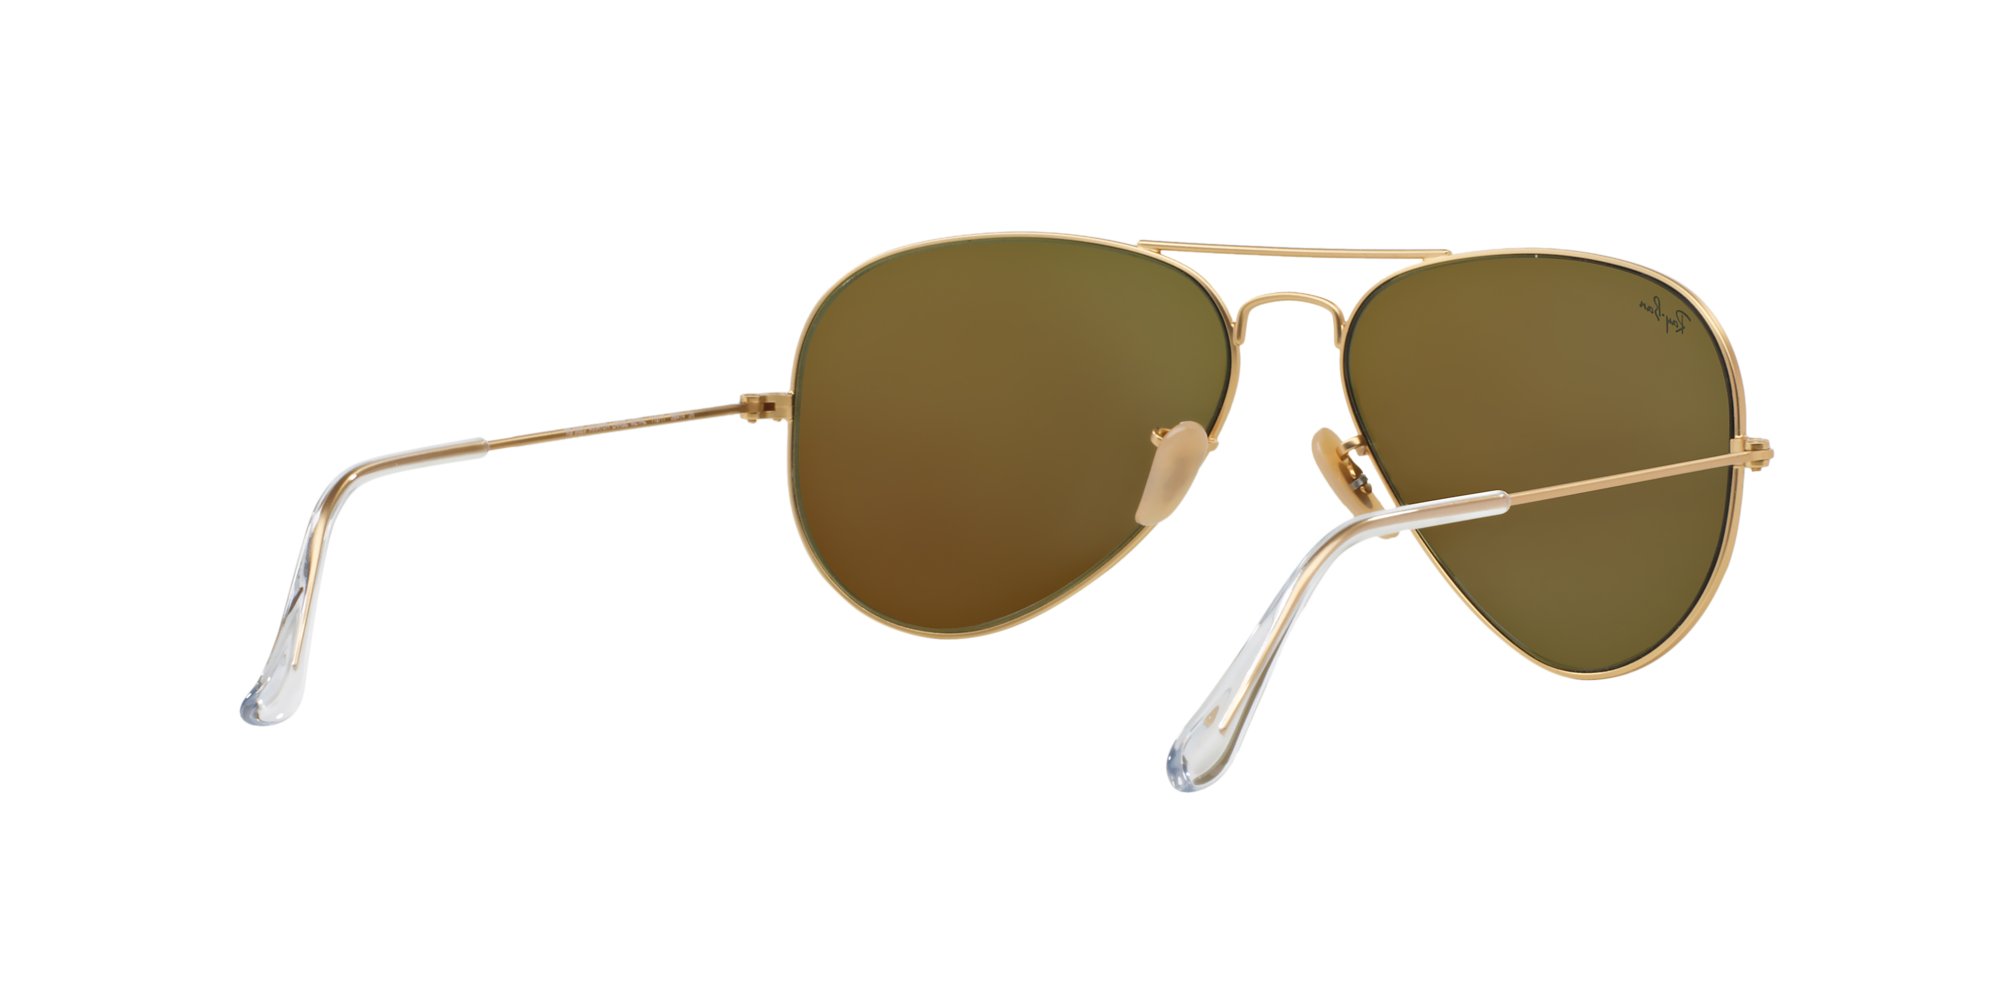 Ray-Ban RB3025 Classic Aviator Sunglasses, 58MM - image 3 of 13